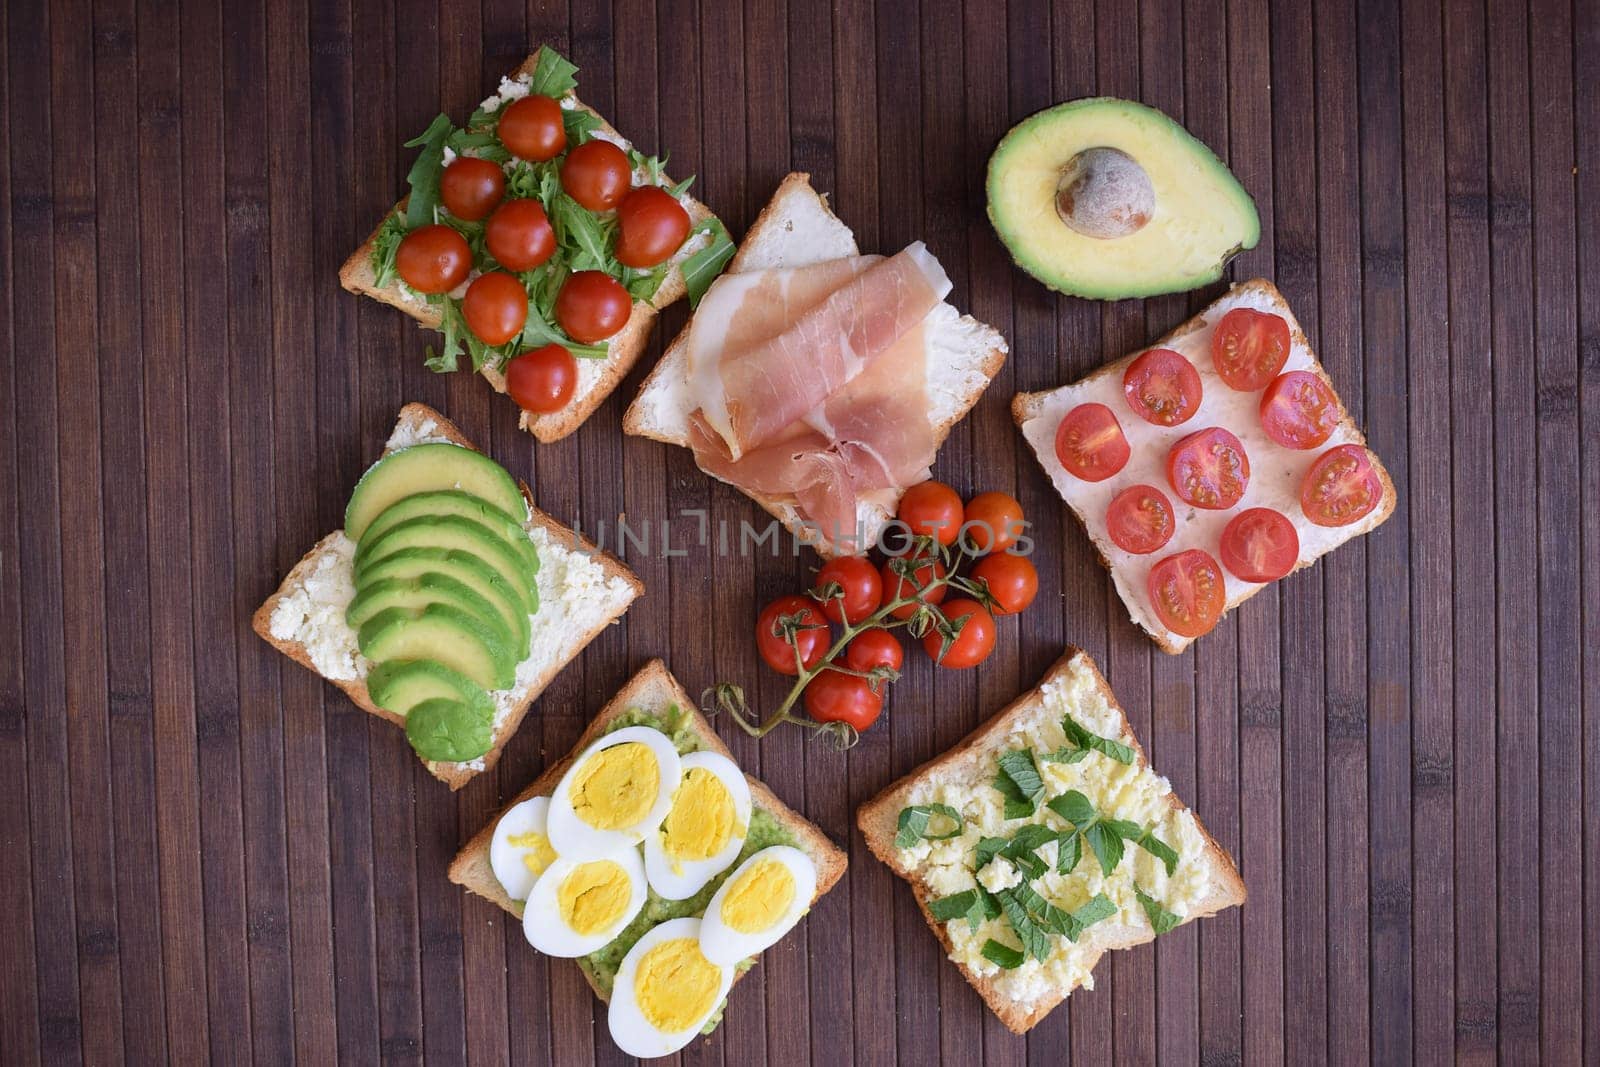 Healthy toast for breakfast with avocado, eggs, tomatoes, arugula etc.